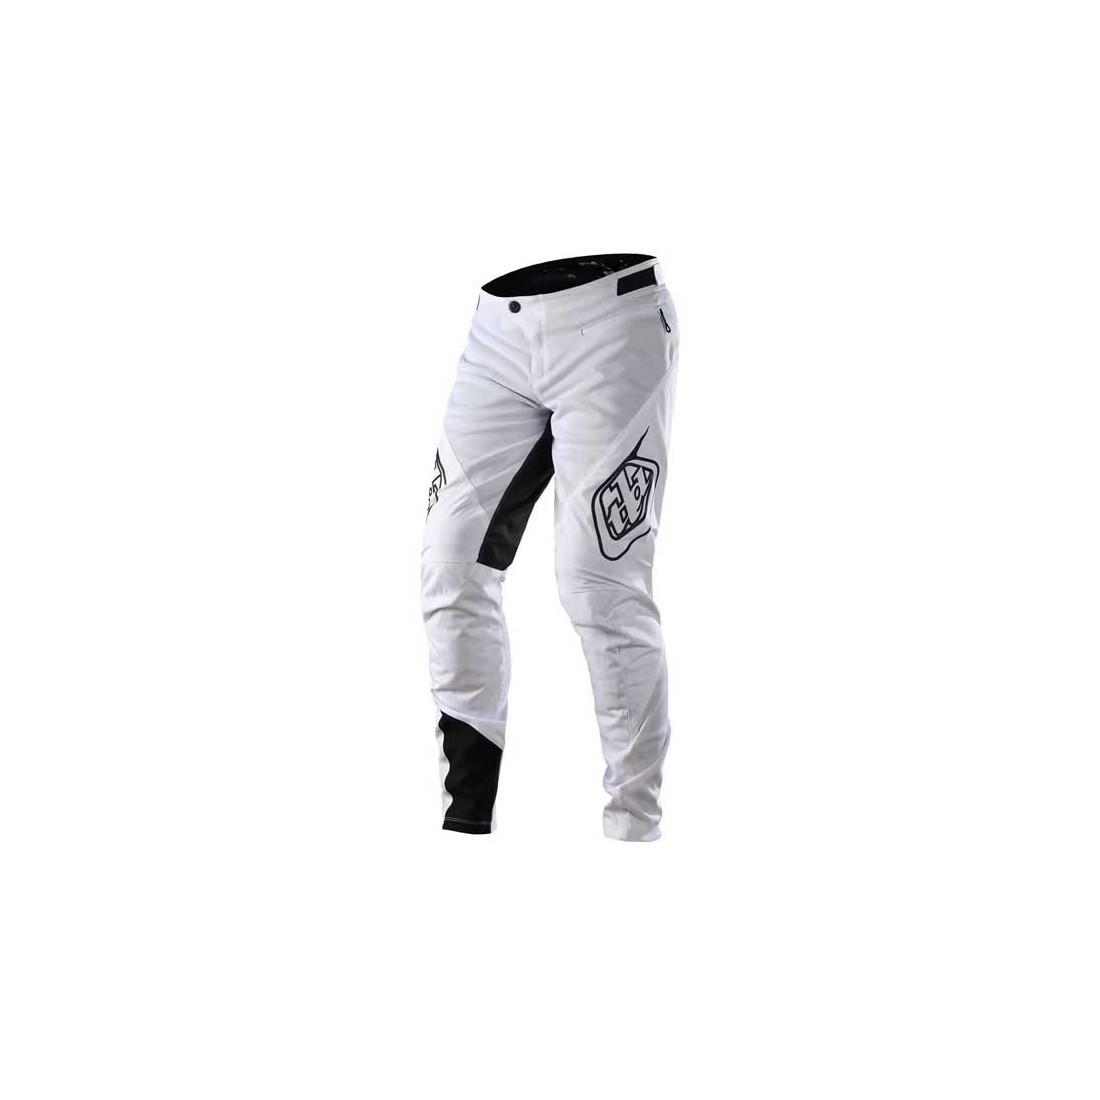 Pantalones MTB Troy Lee Designs Sprint blanco